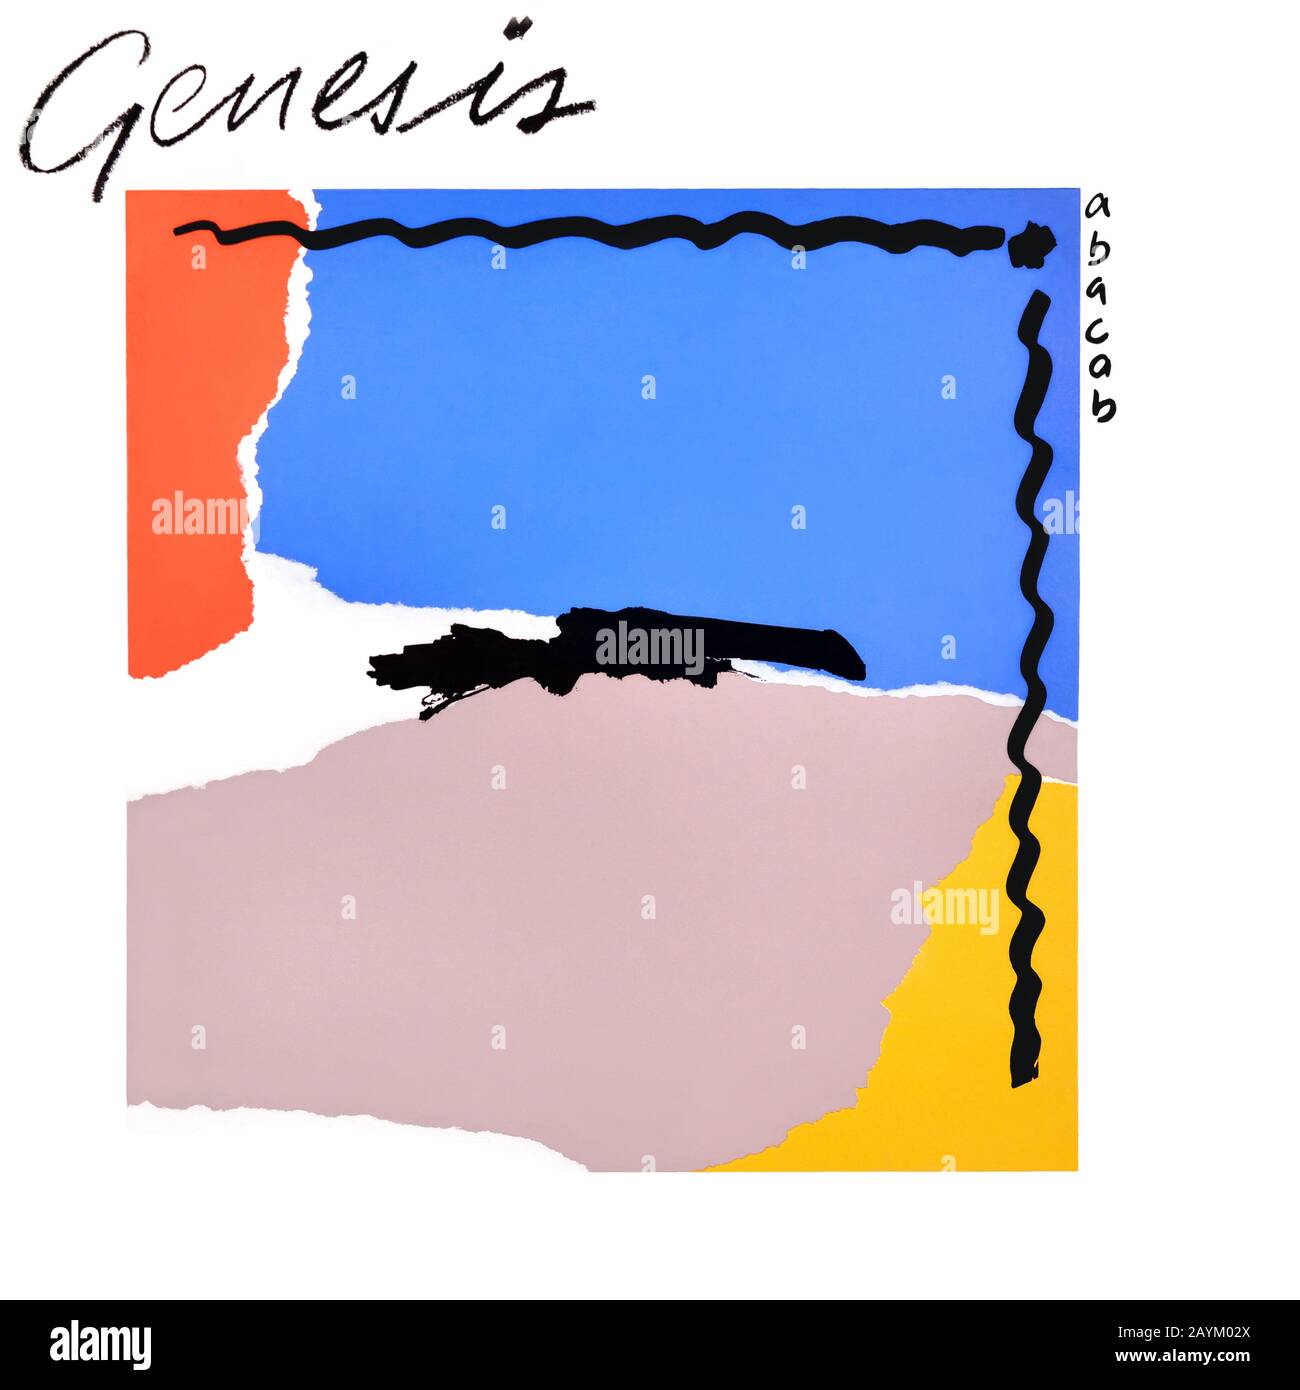 Genesis - copertina originale in vinile - Abacab - 1981 Foto stock - Alamy